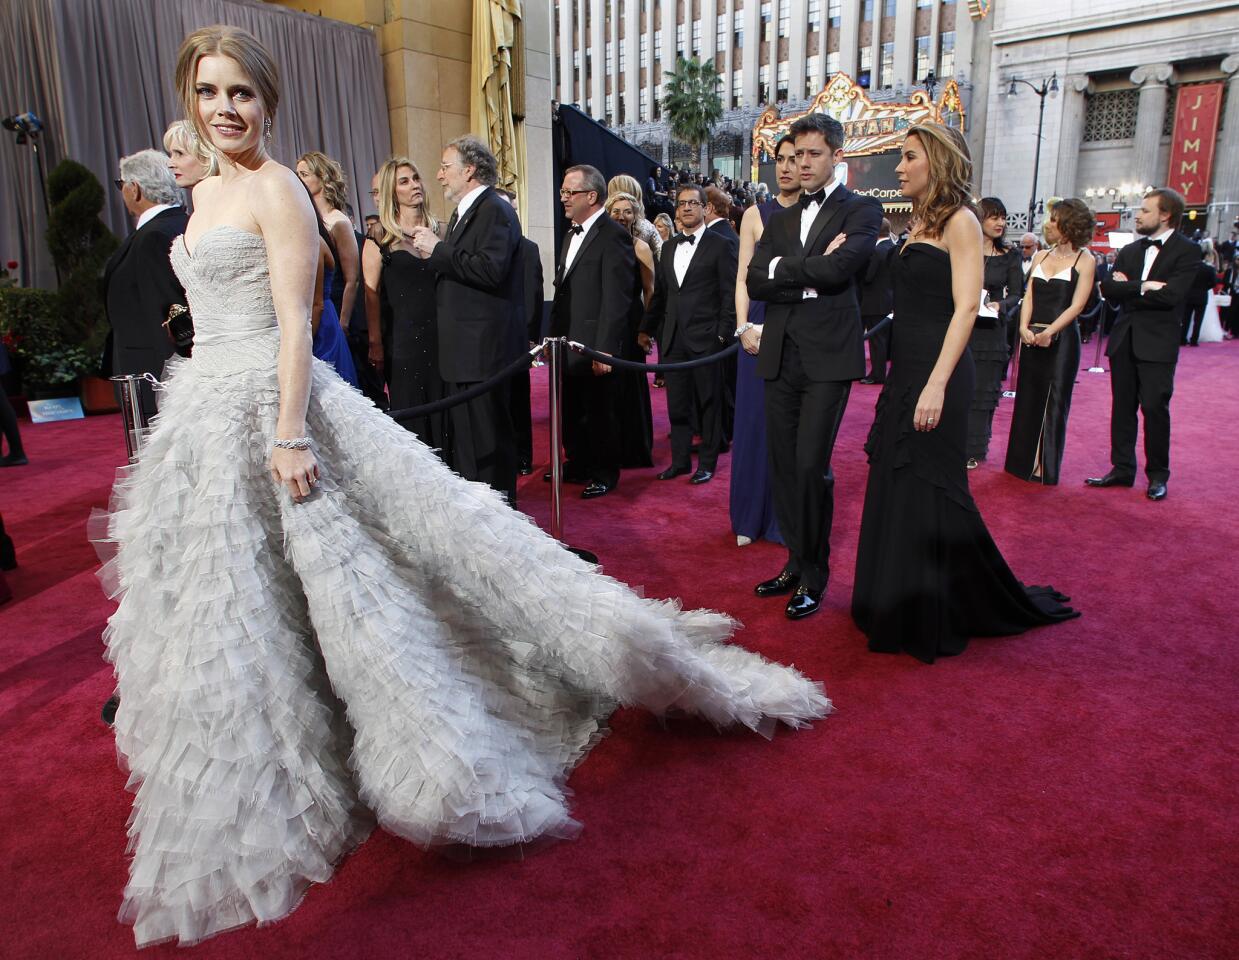 Actress Amy Adams arrives at the 2013 Academy Awards in a princess ball gown designed by Oscar de la Renta.